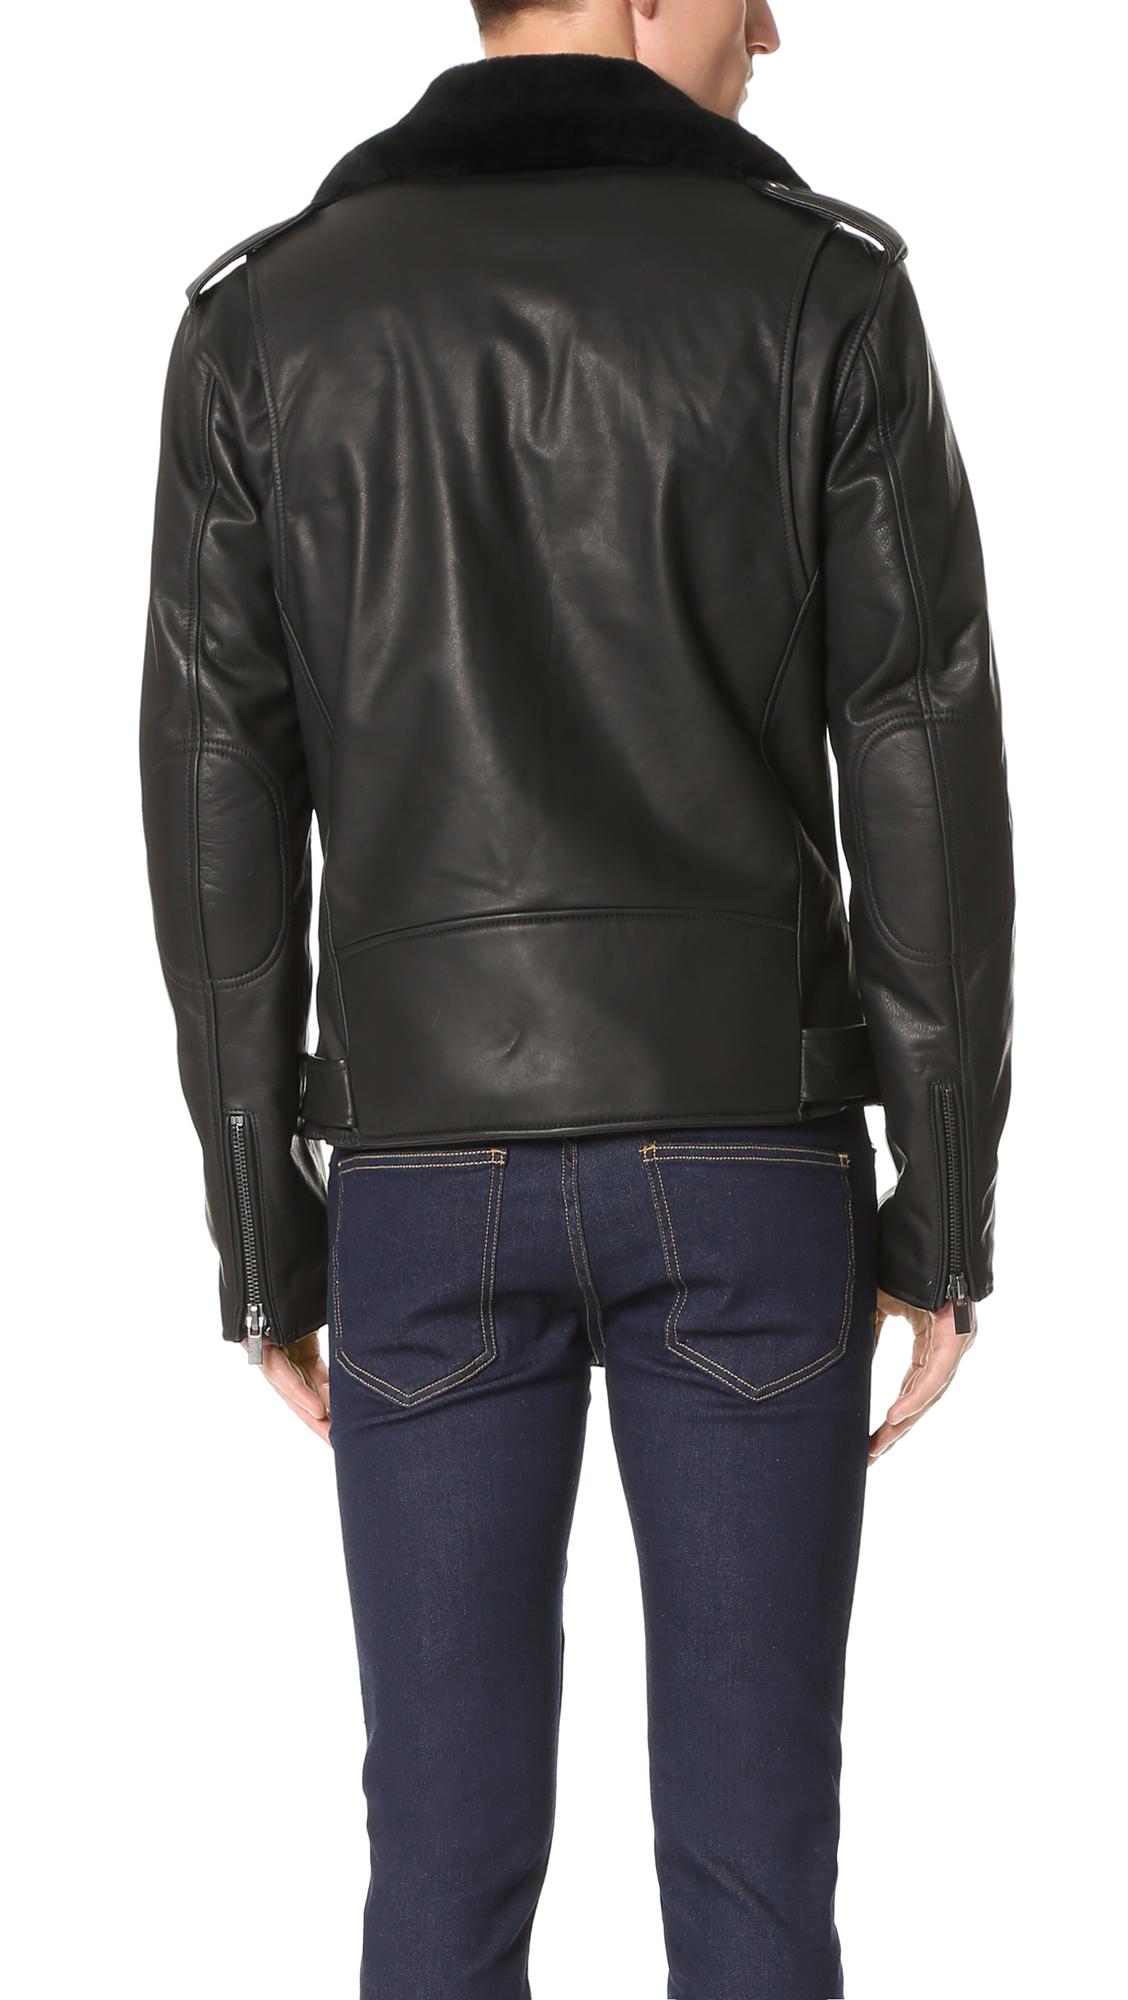 Lyst - Blk Dnm Fringed Leather Jacket in Black for Men